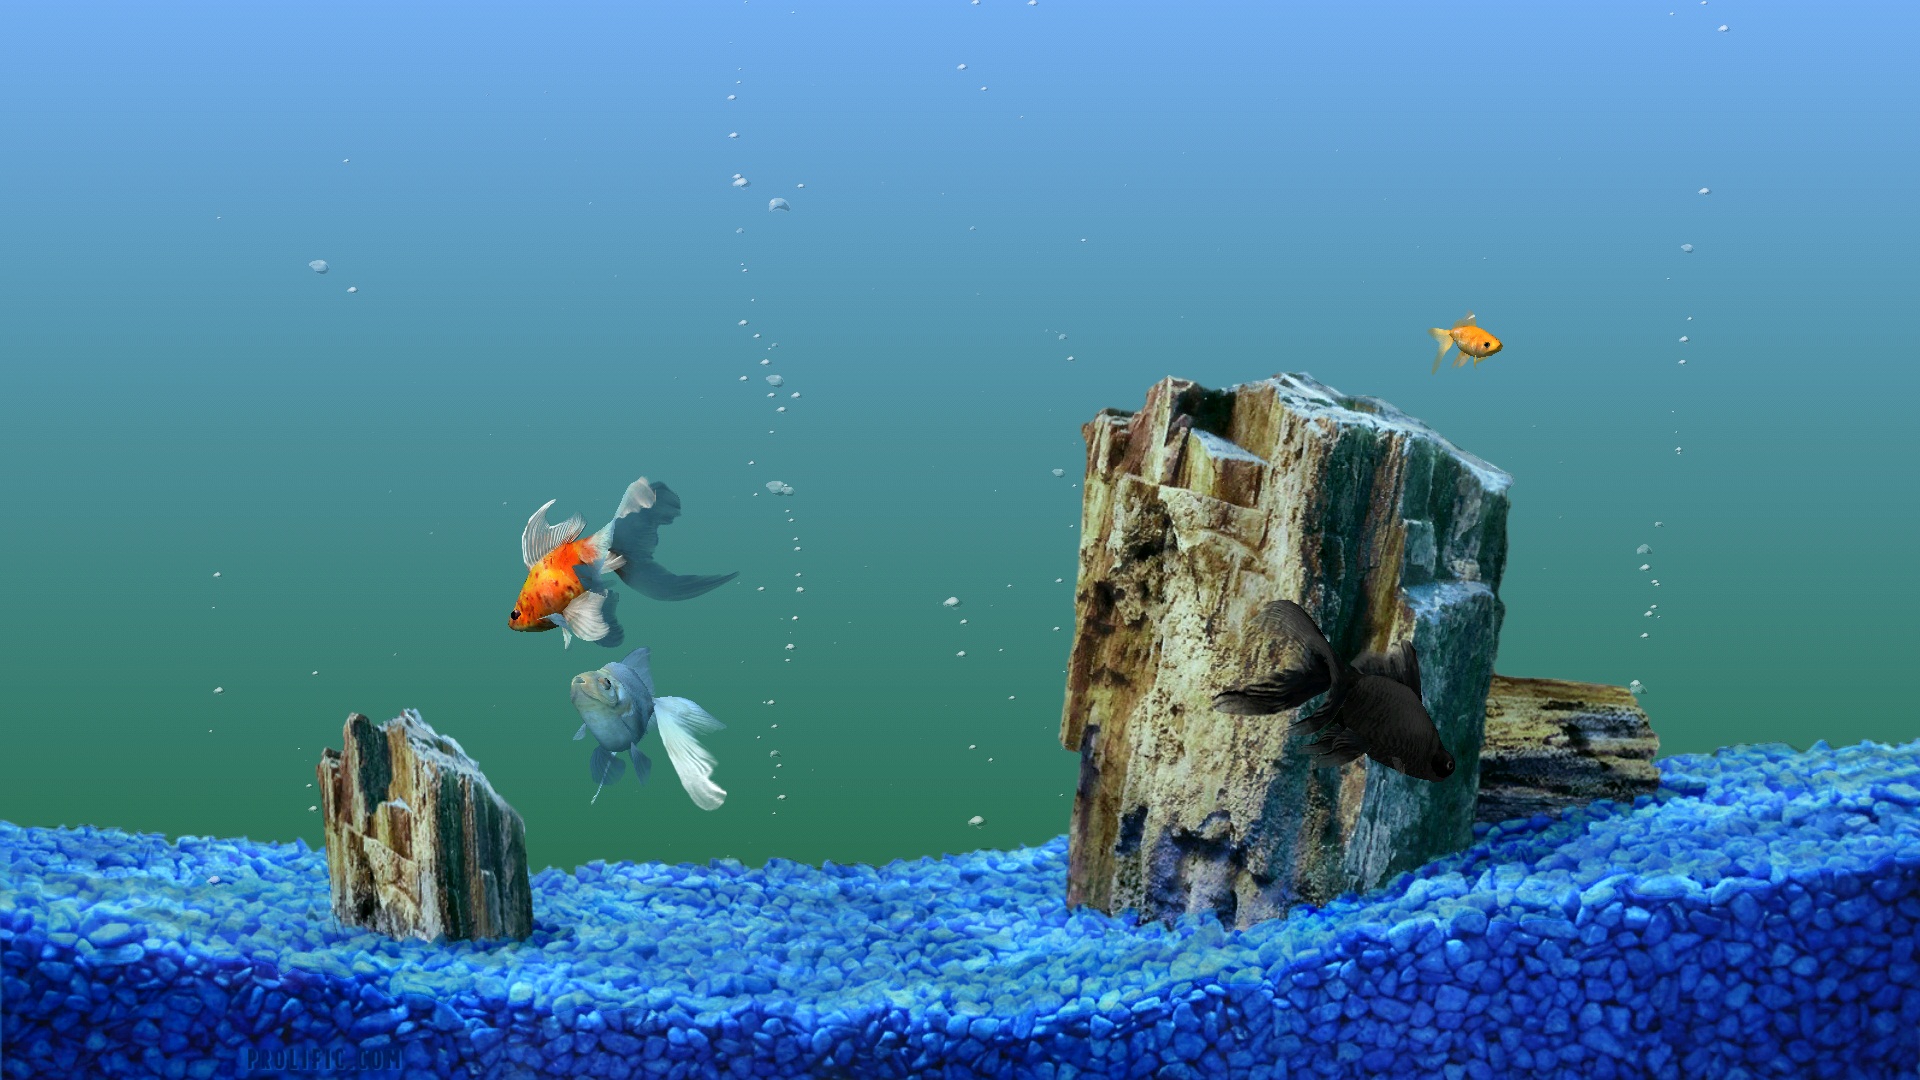 hd animated fish tank wallpaper download